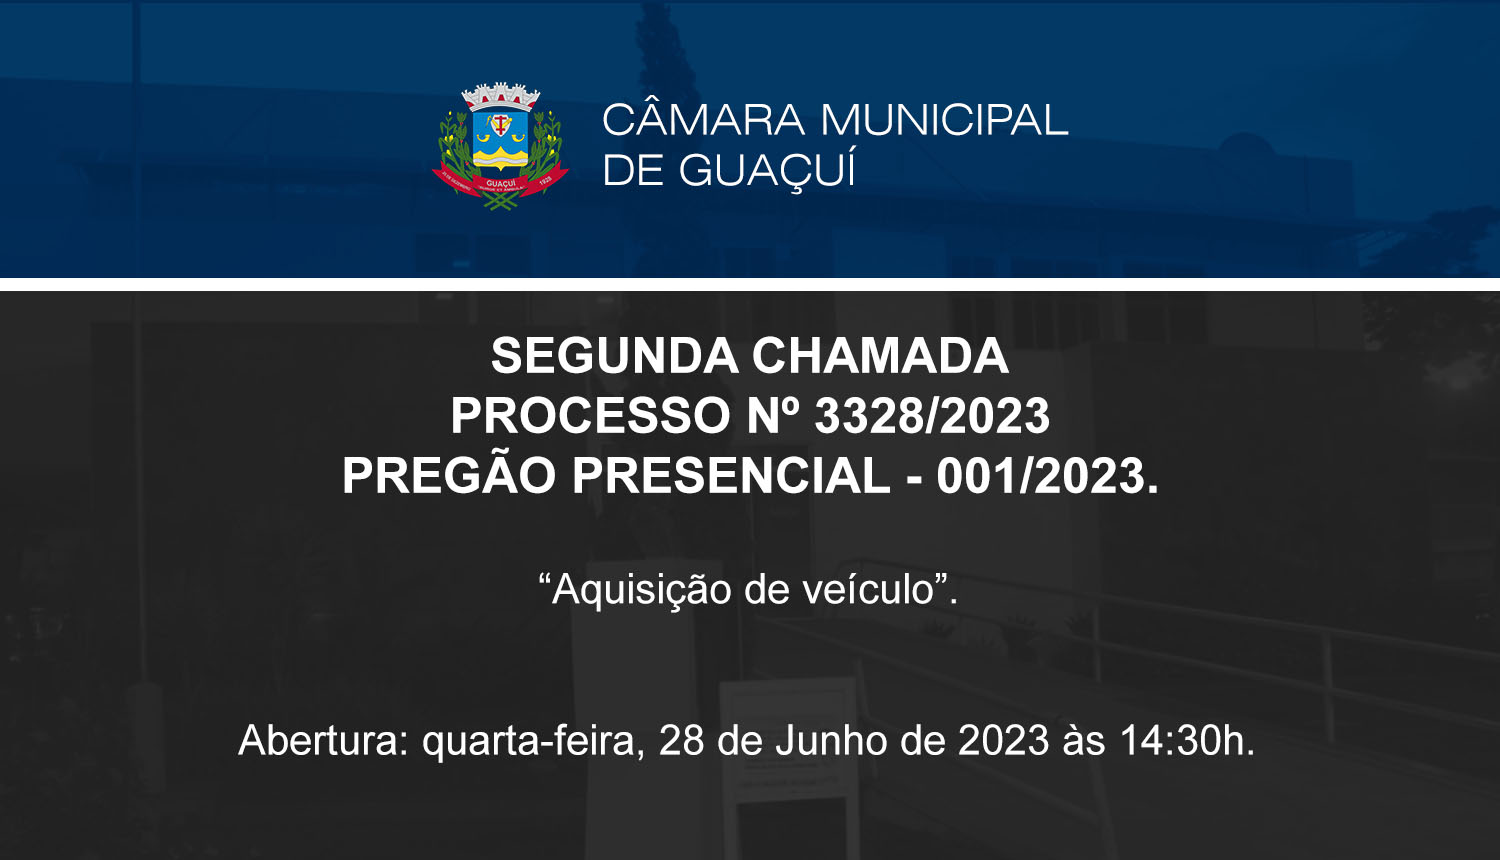 SEGUNDA CHAMADA - PROCESSO 3328/2023.